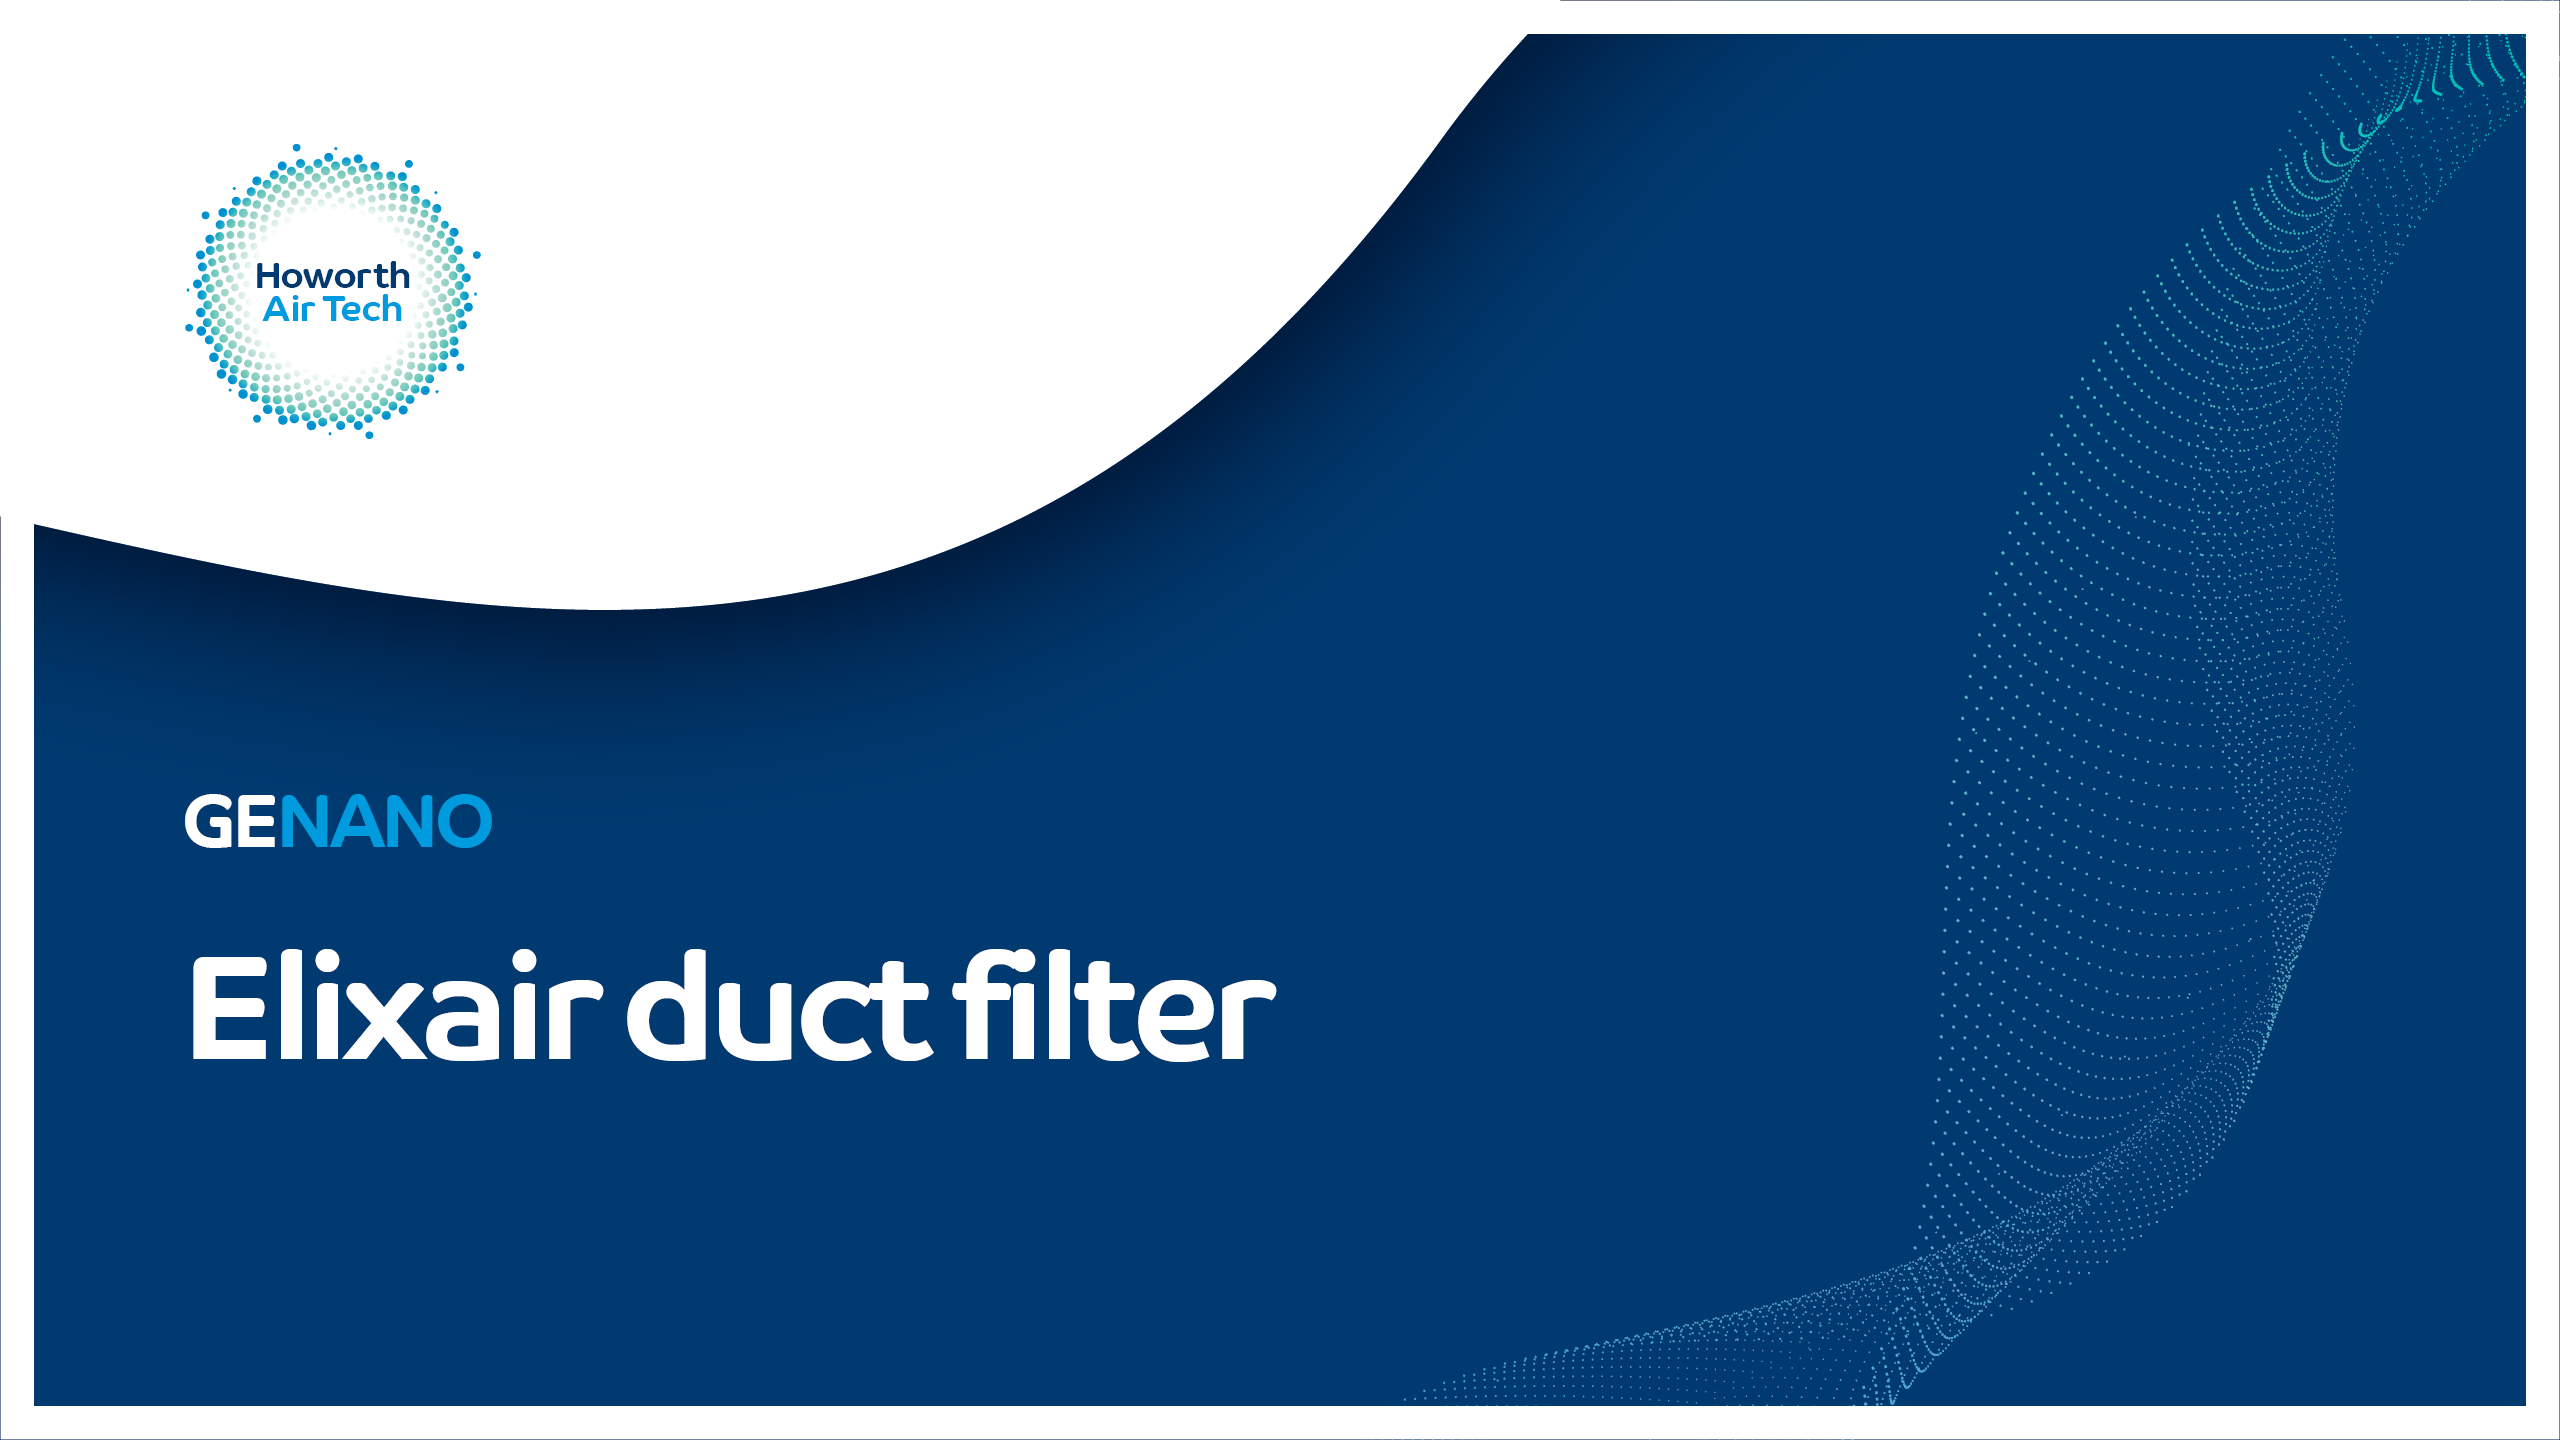 GENANO - Elixair duct filter